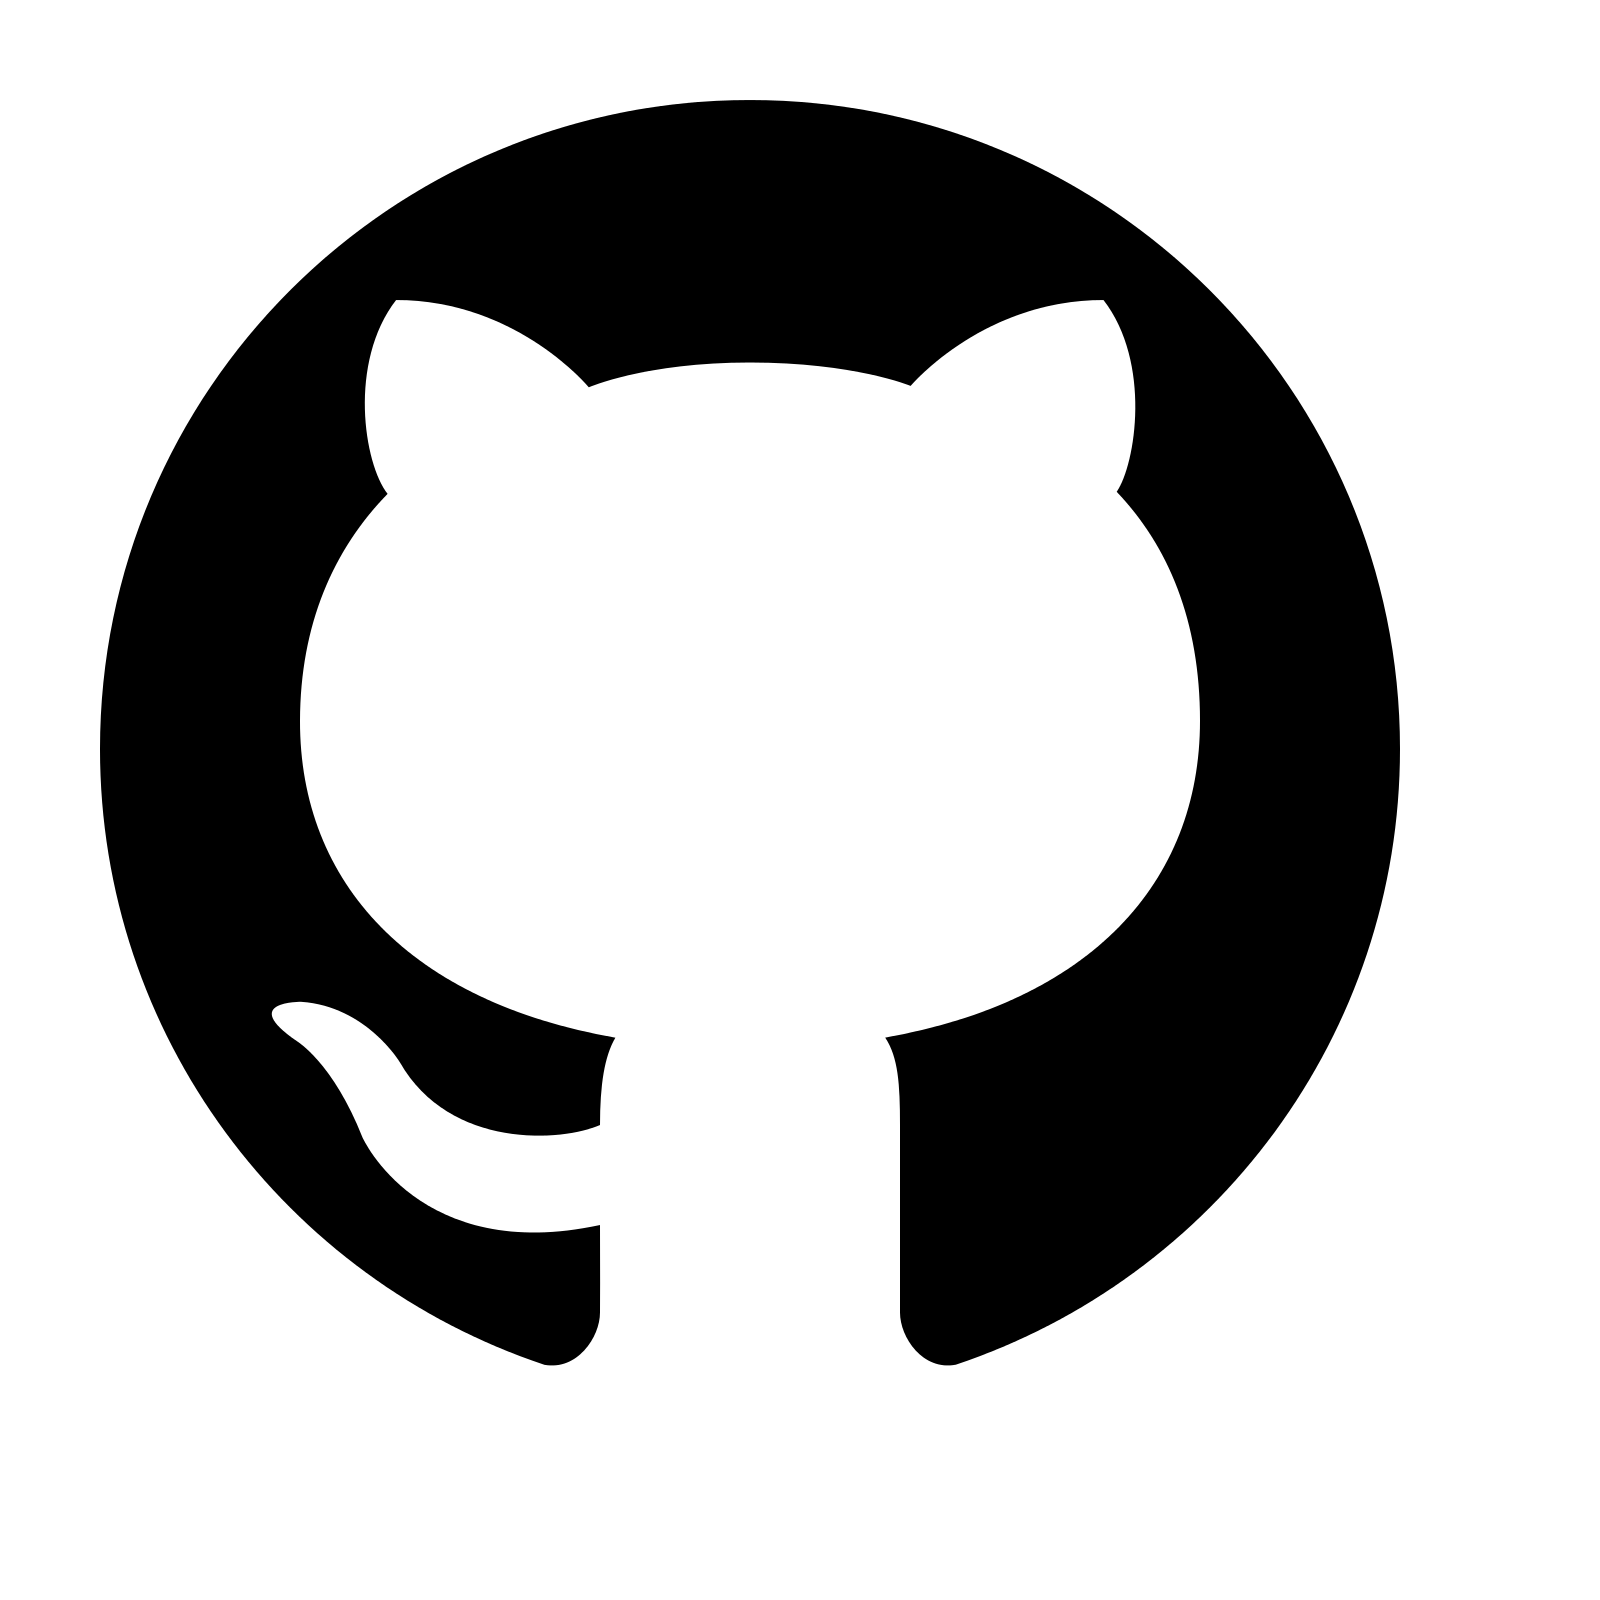 Download Black Github Logo PNG Image Background | PNG Arts